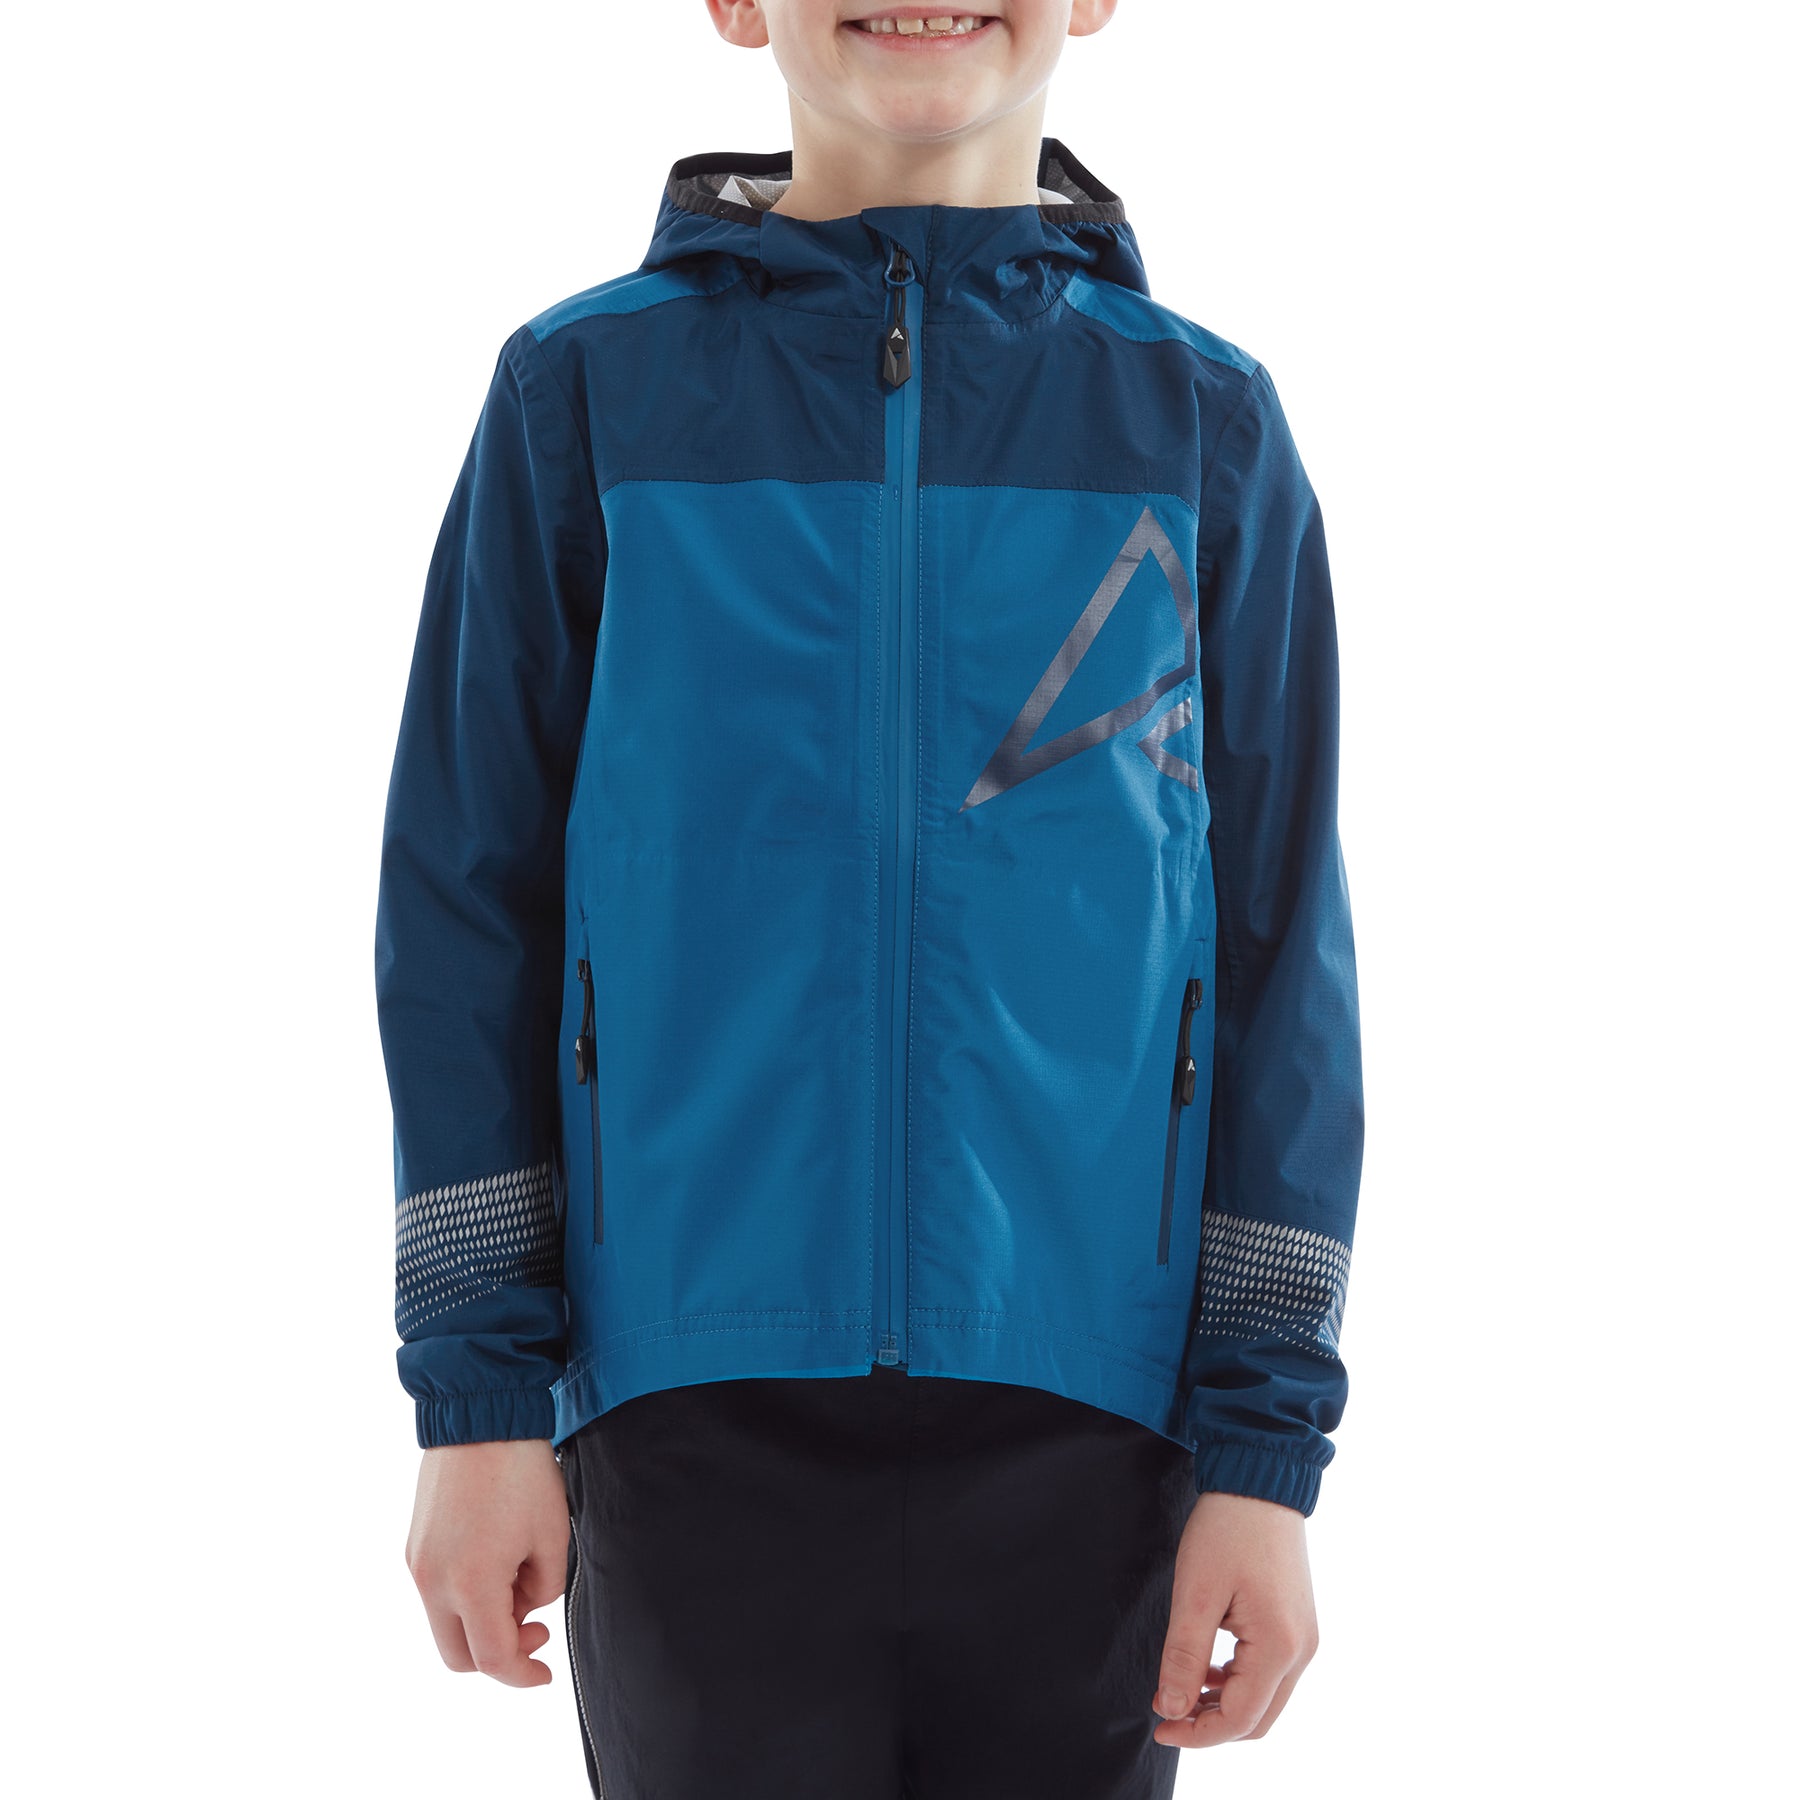 Altura Spark Kid's Jacket Blue 9-10 YEARS